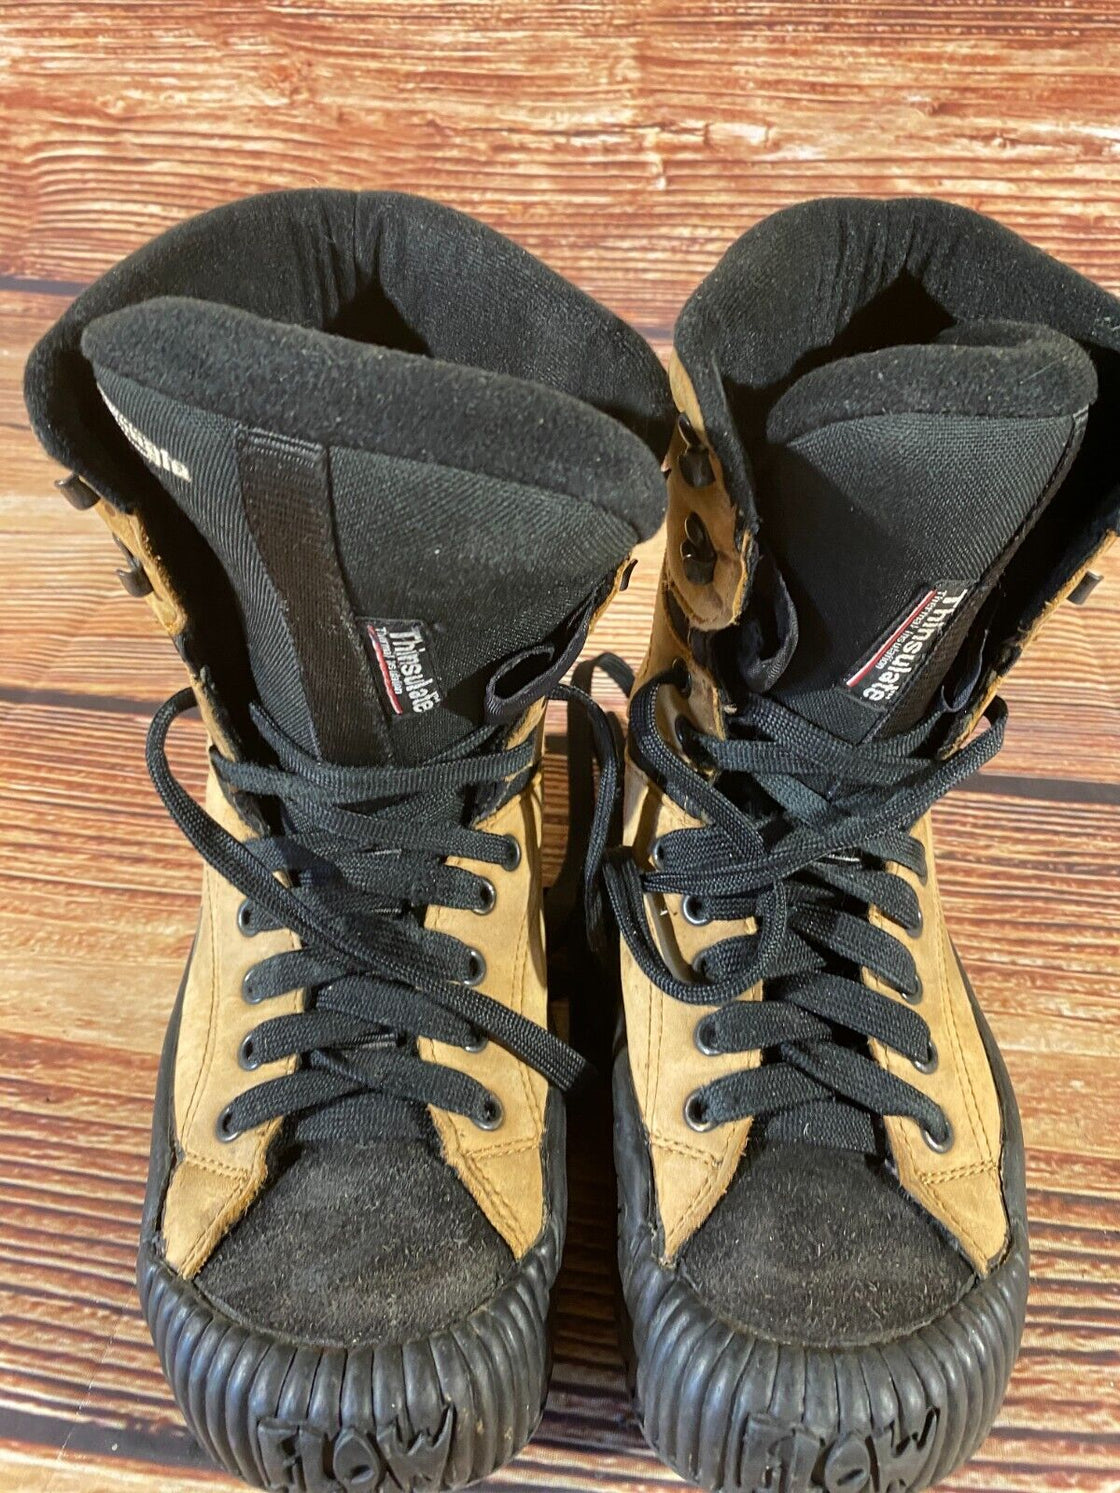 BOOGIE Vintage Snowboard Boots Size EU41, US8, UK7, Mondo 263 mm